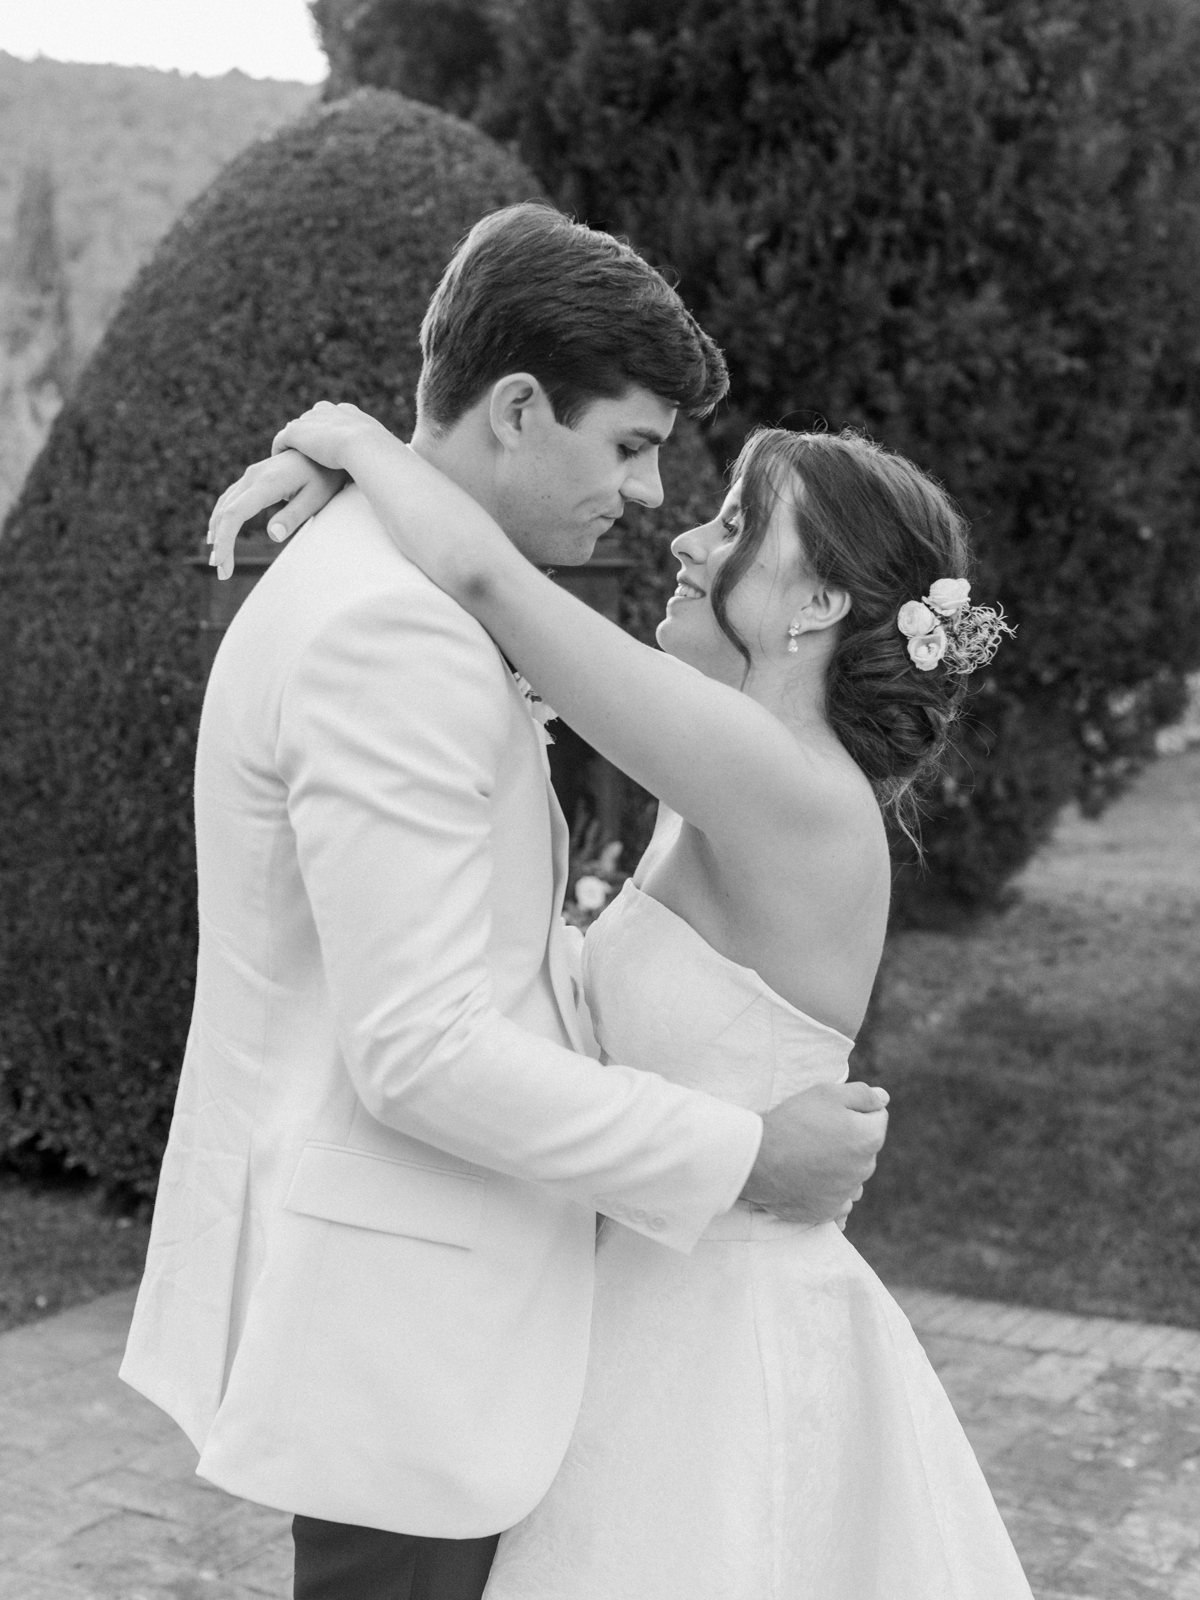 Villa Cetinale Wedding Photographer | Siena Wedding Venue | Tuscany Film Photographer | Italy Destination Wedding | Molly Carr Photography | First Dance